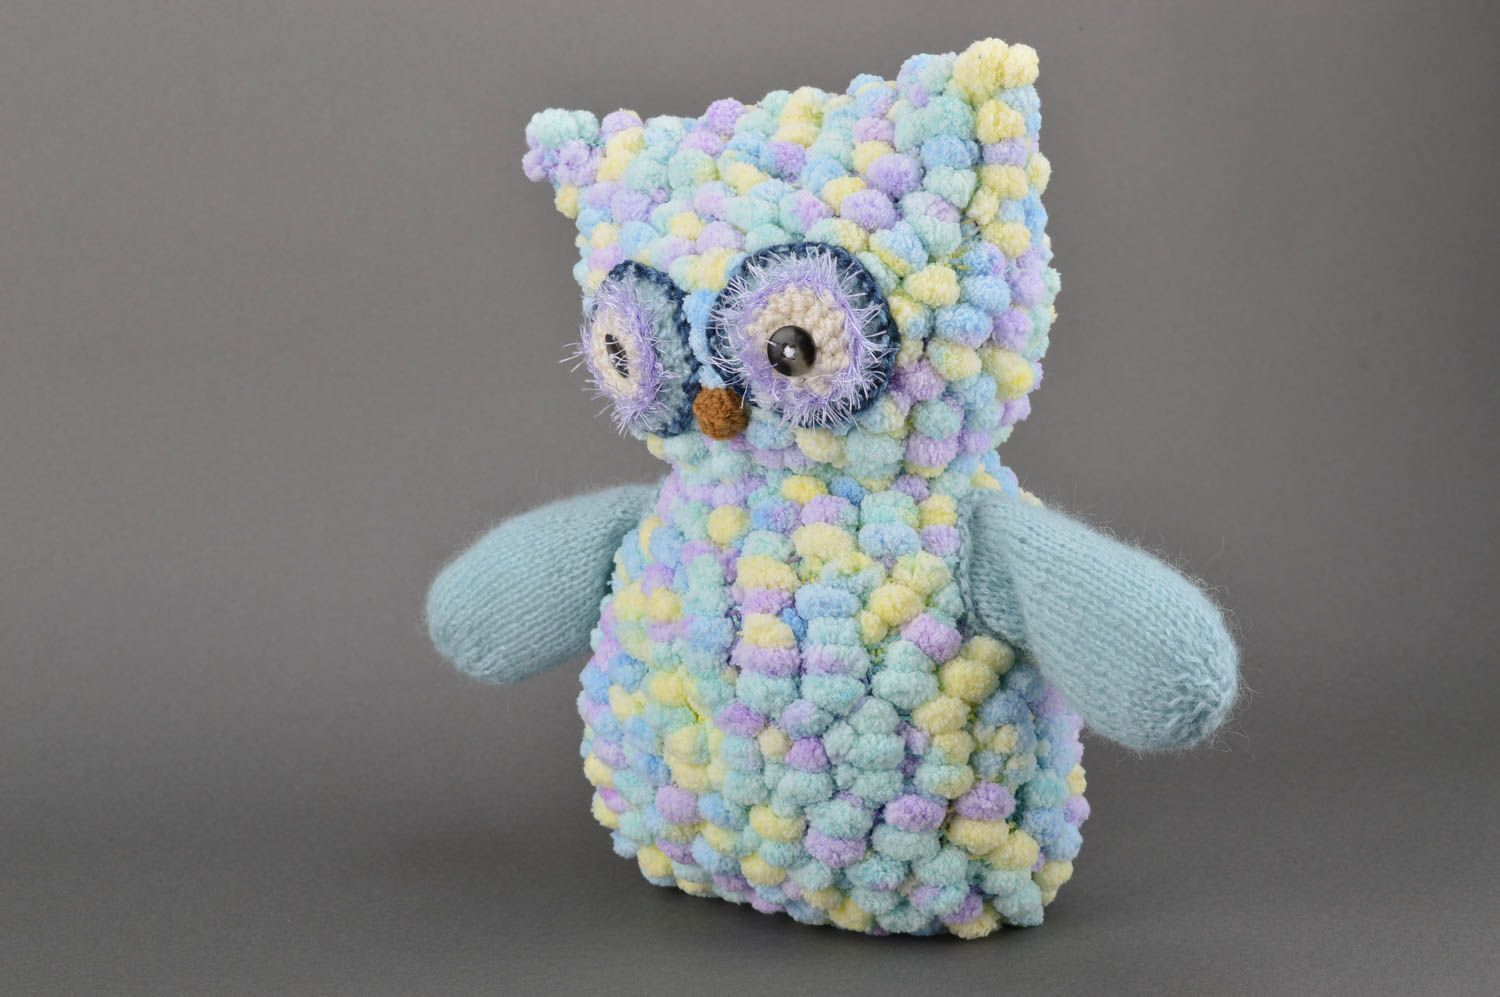 Handmade soft toy decorative stuffed toy present for baby nursery decor ideas photo 3